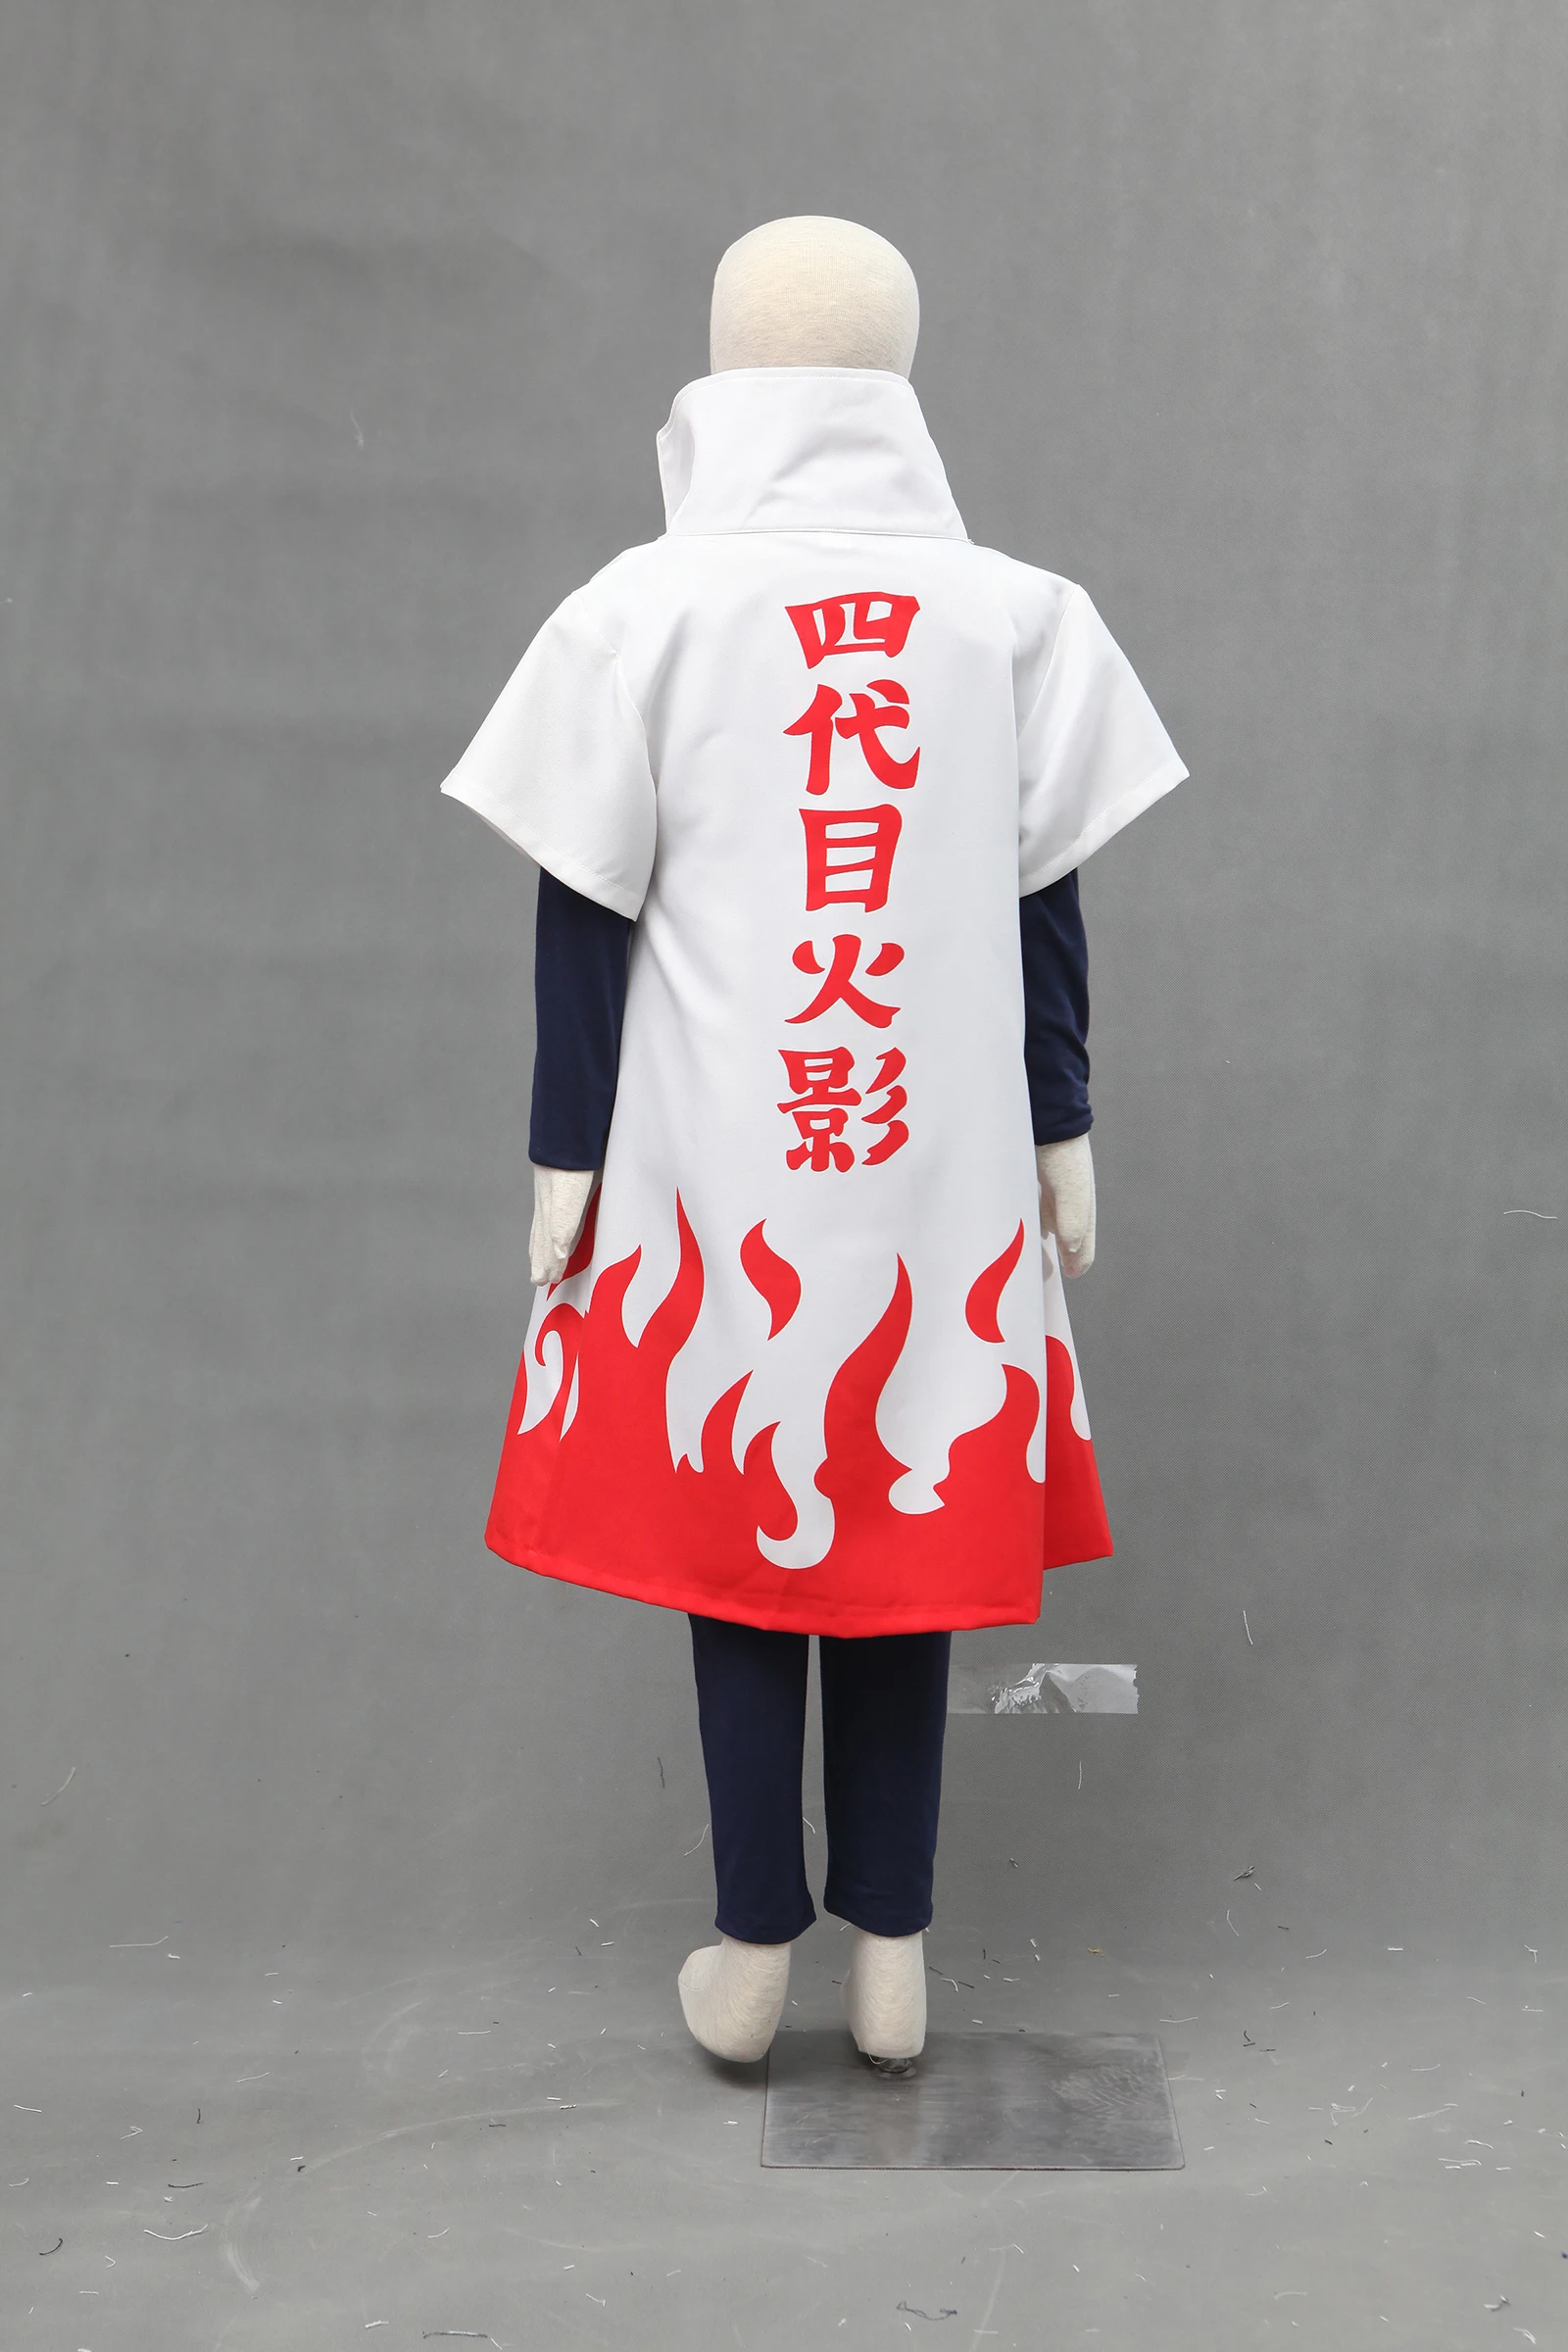 Compra online de Namikaze minato cosplay de trajes de desenhos